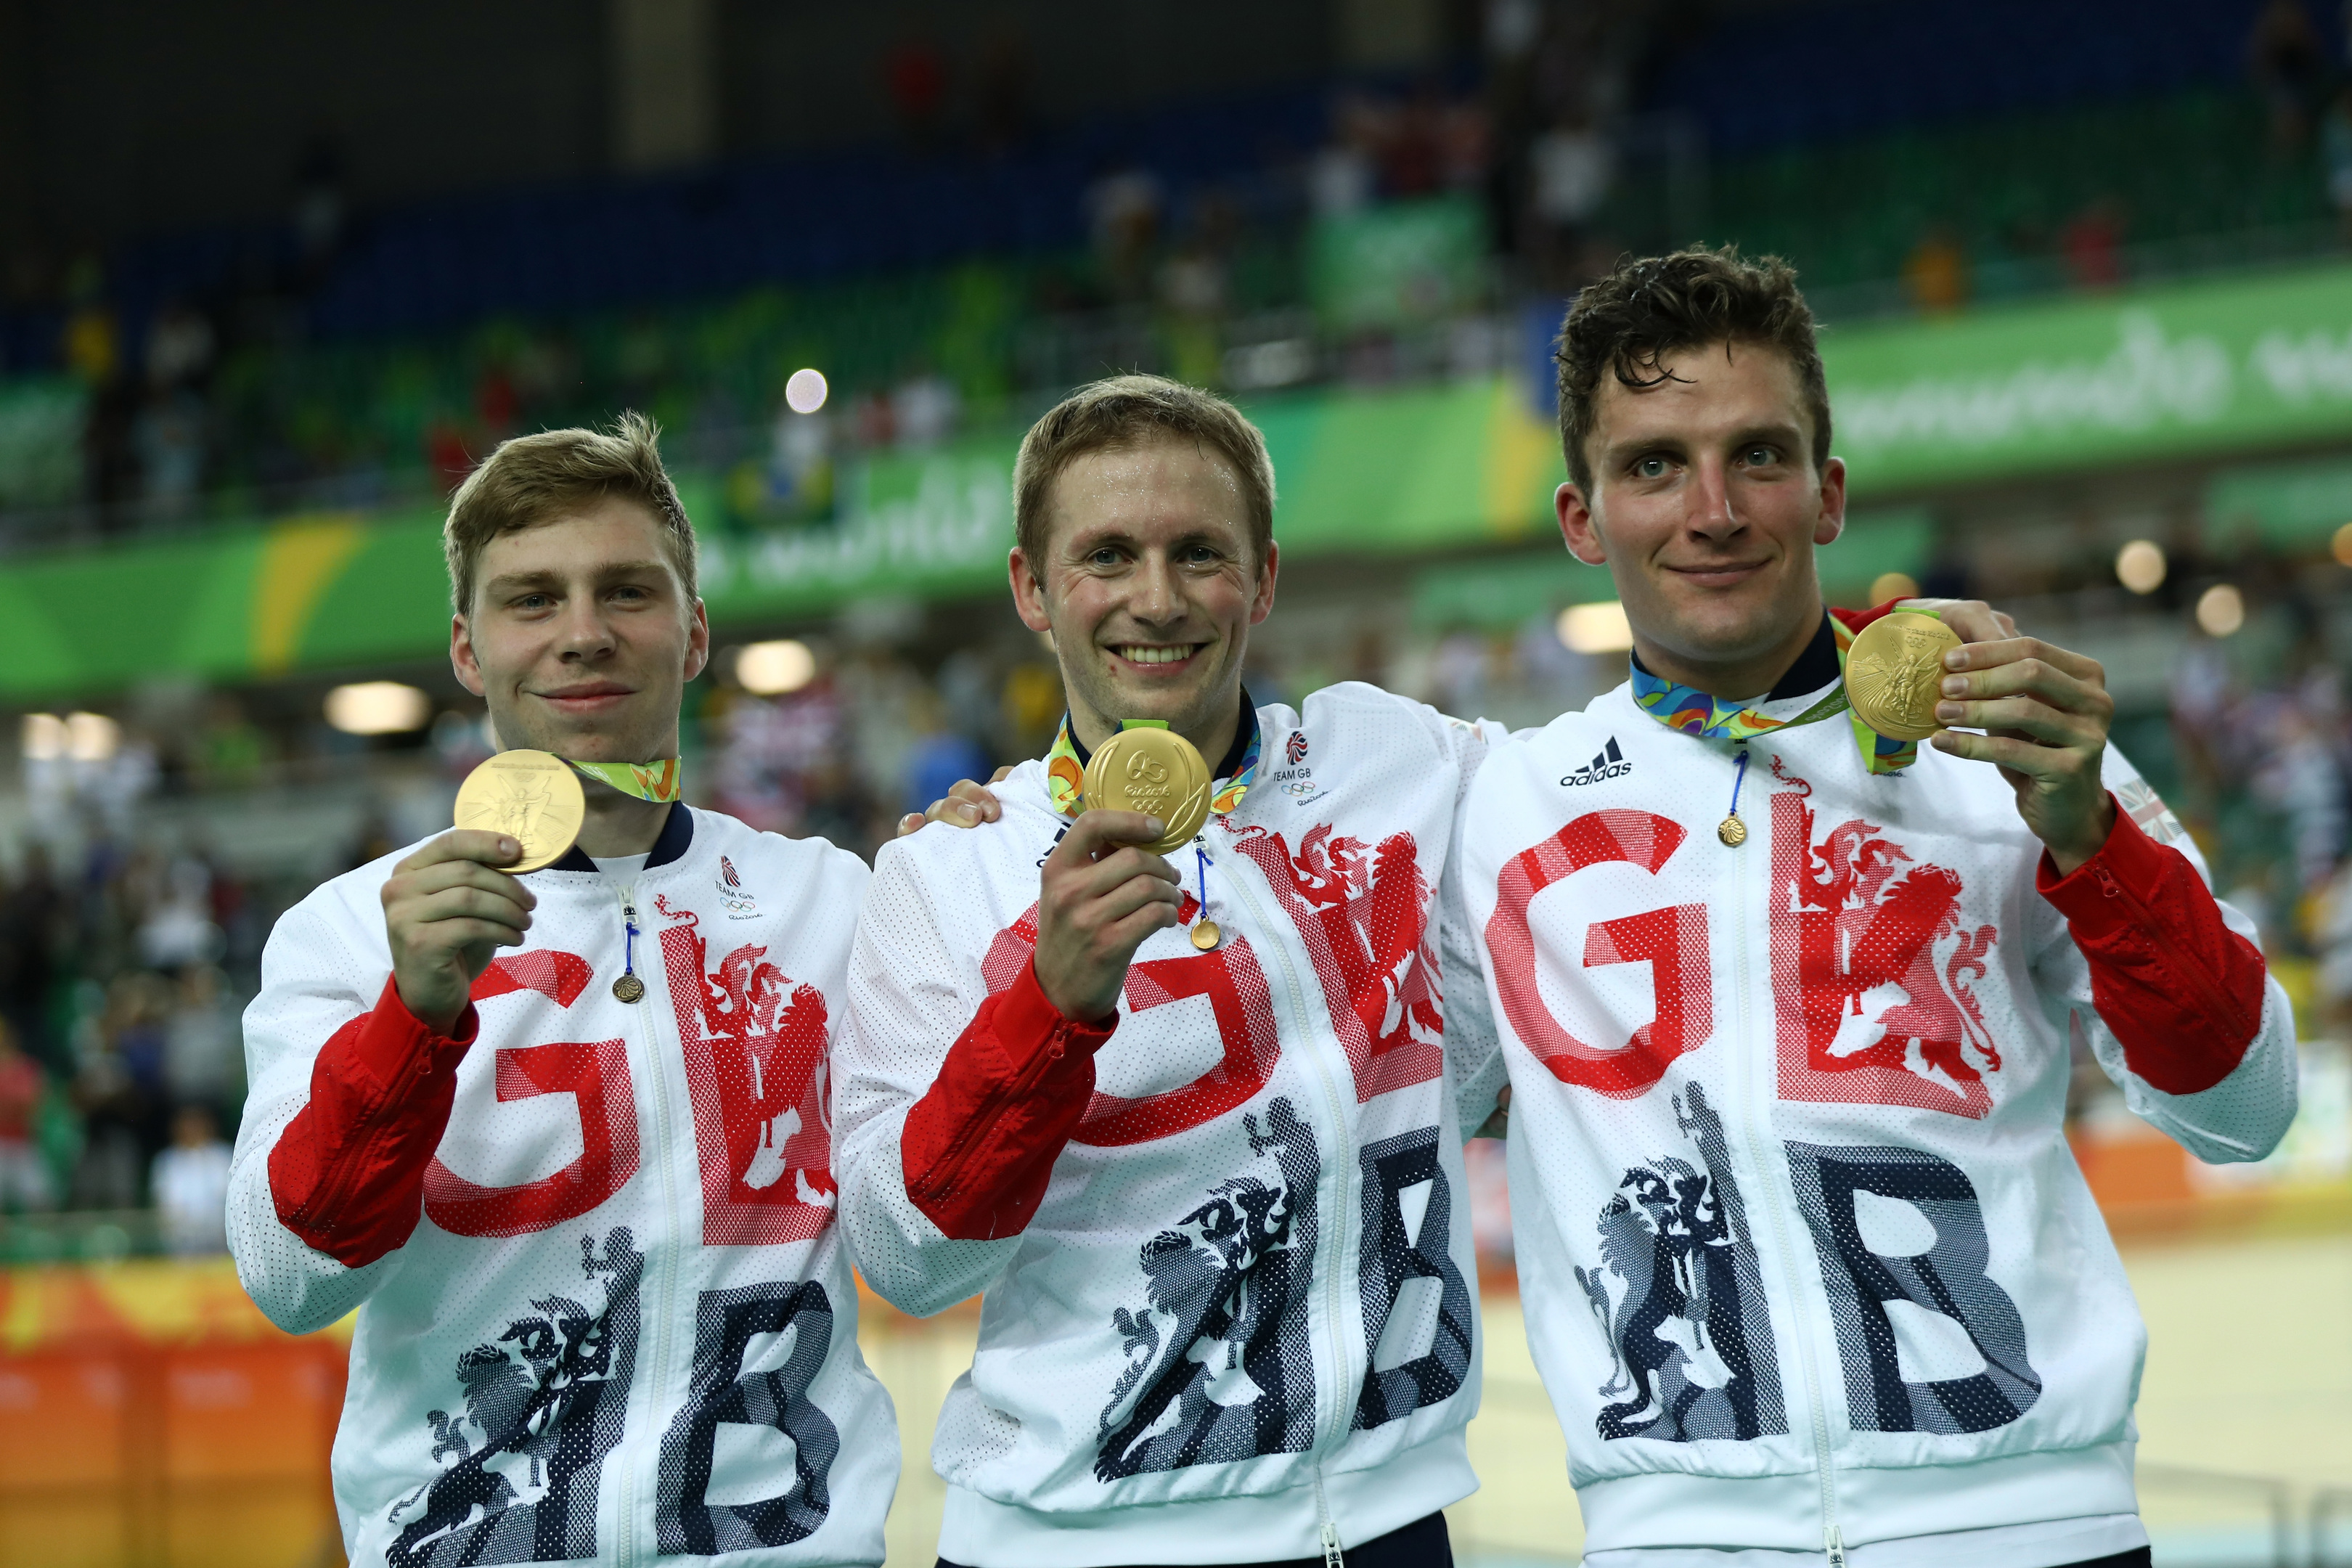 Some British gold medallists.